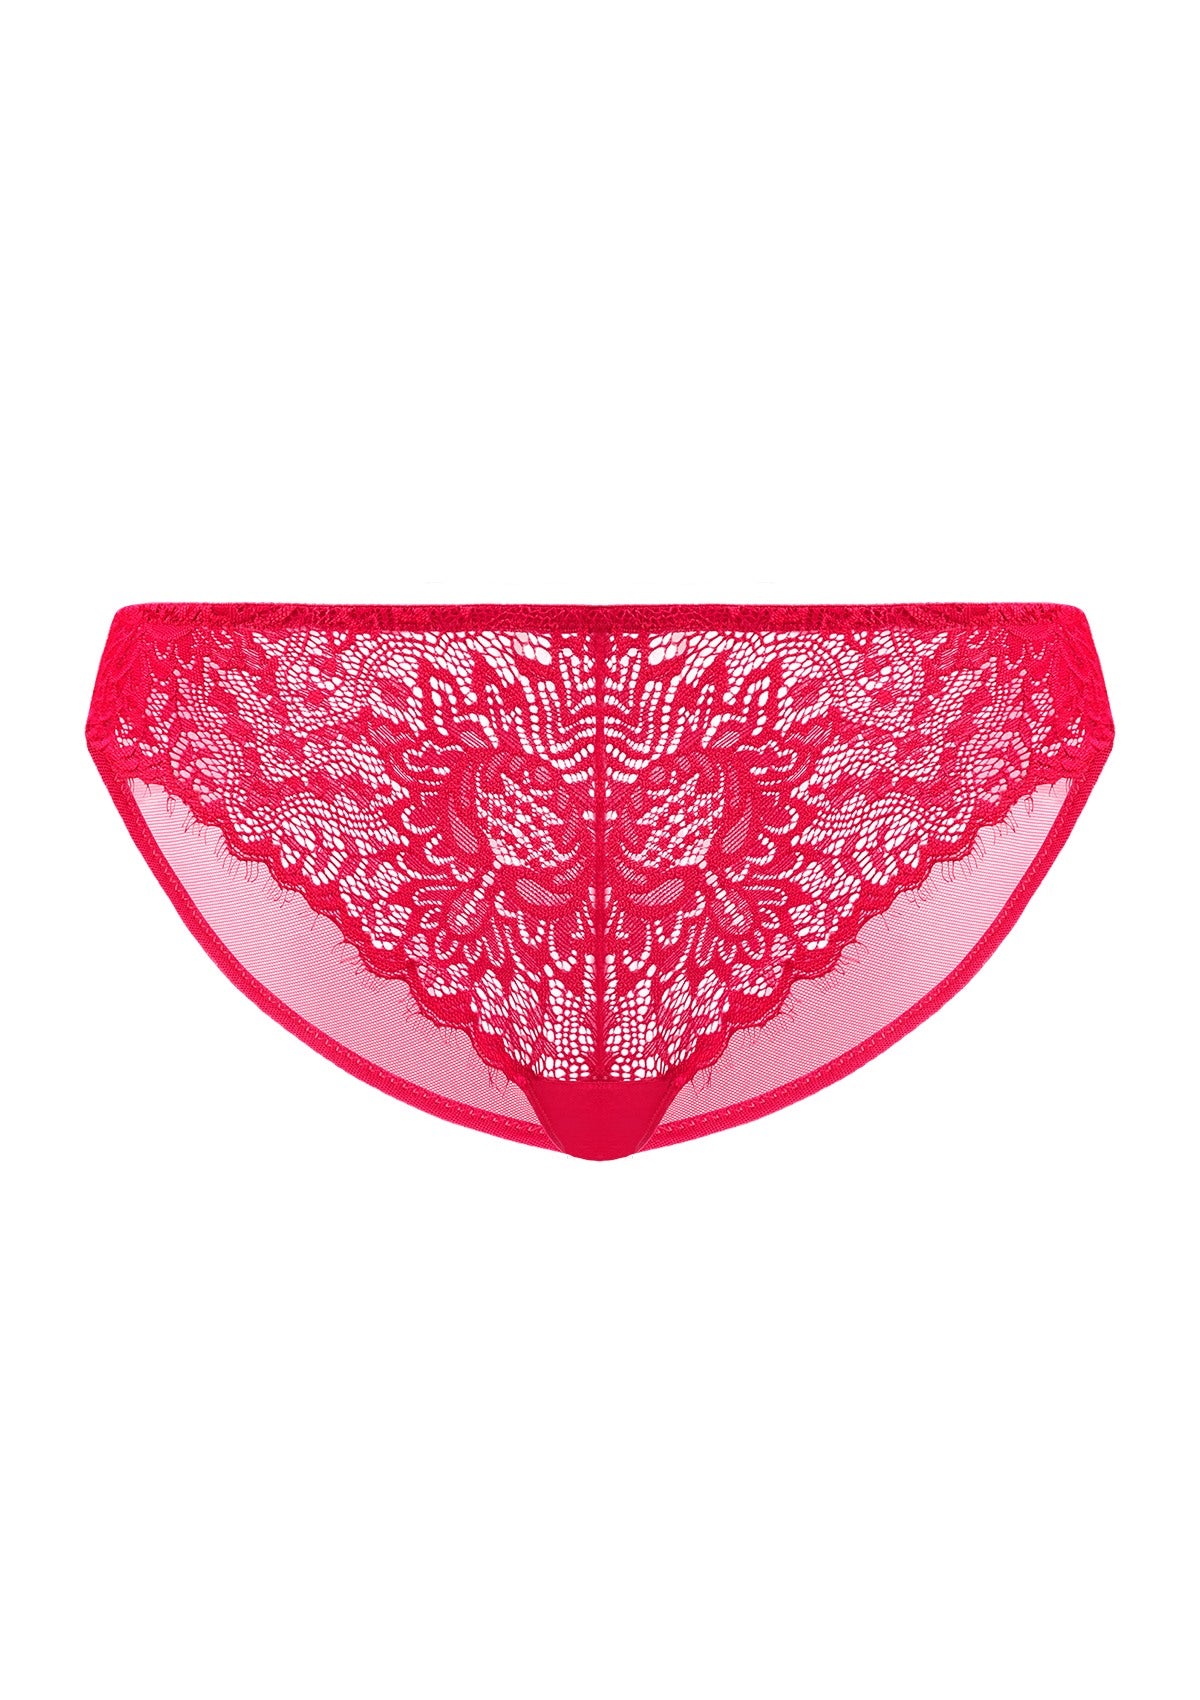 HSIA Sunflower Exquisite Raspberry Lace Bikini Underwear - XXL / Raspberry